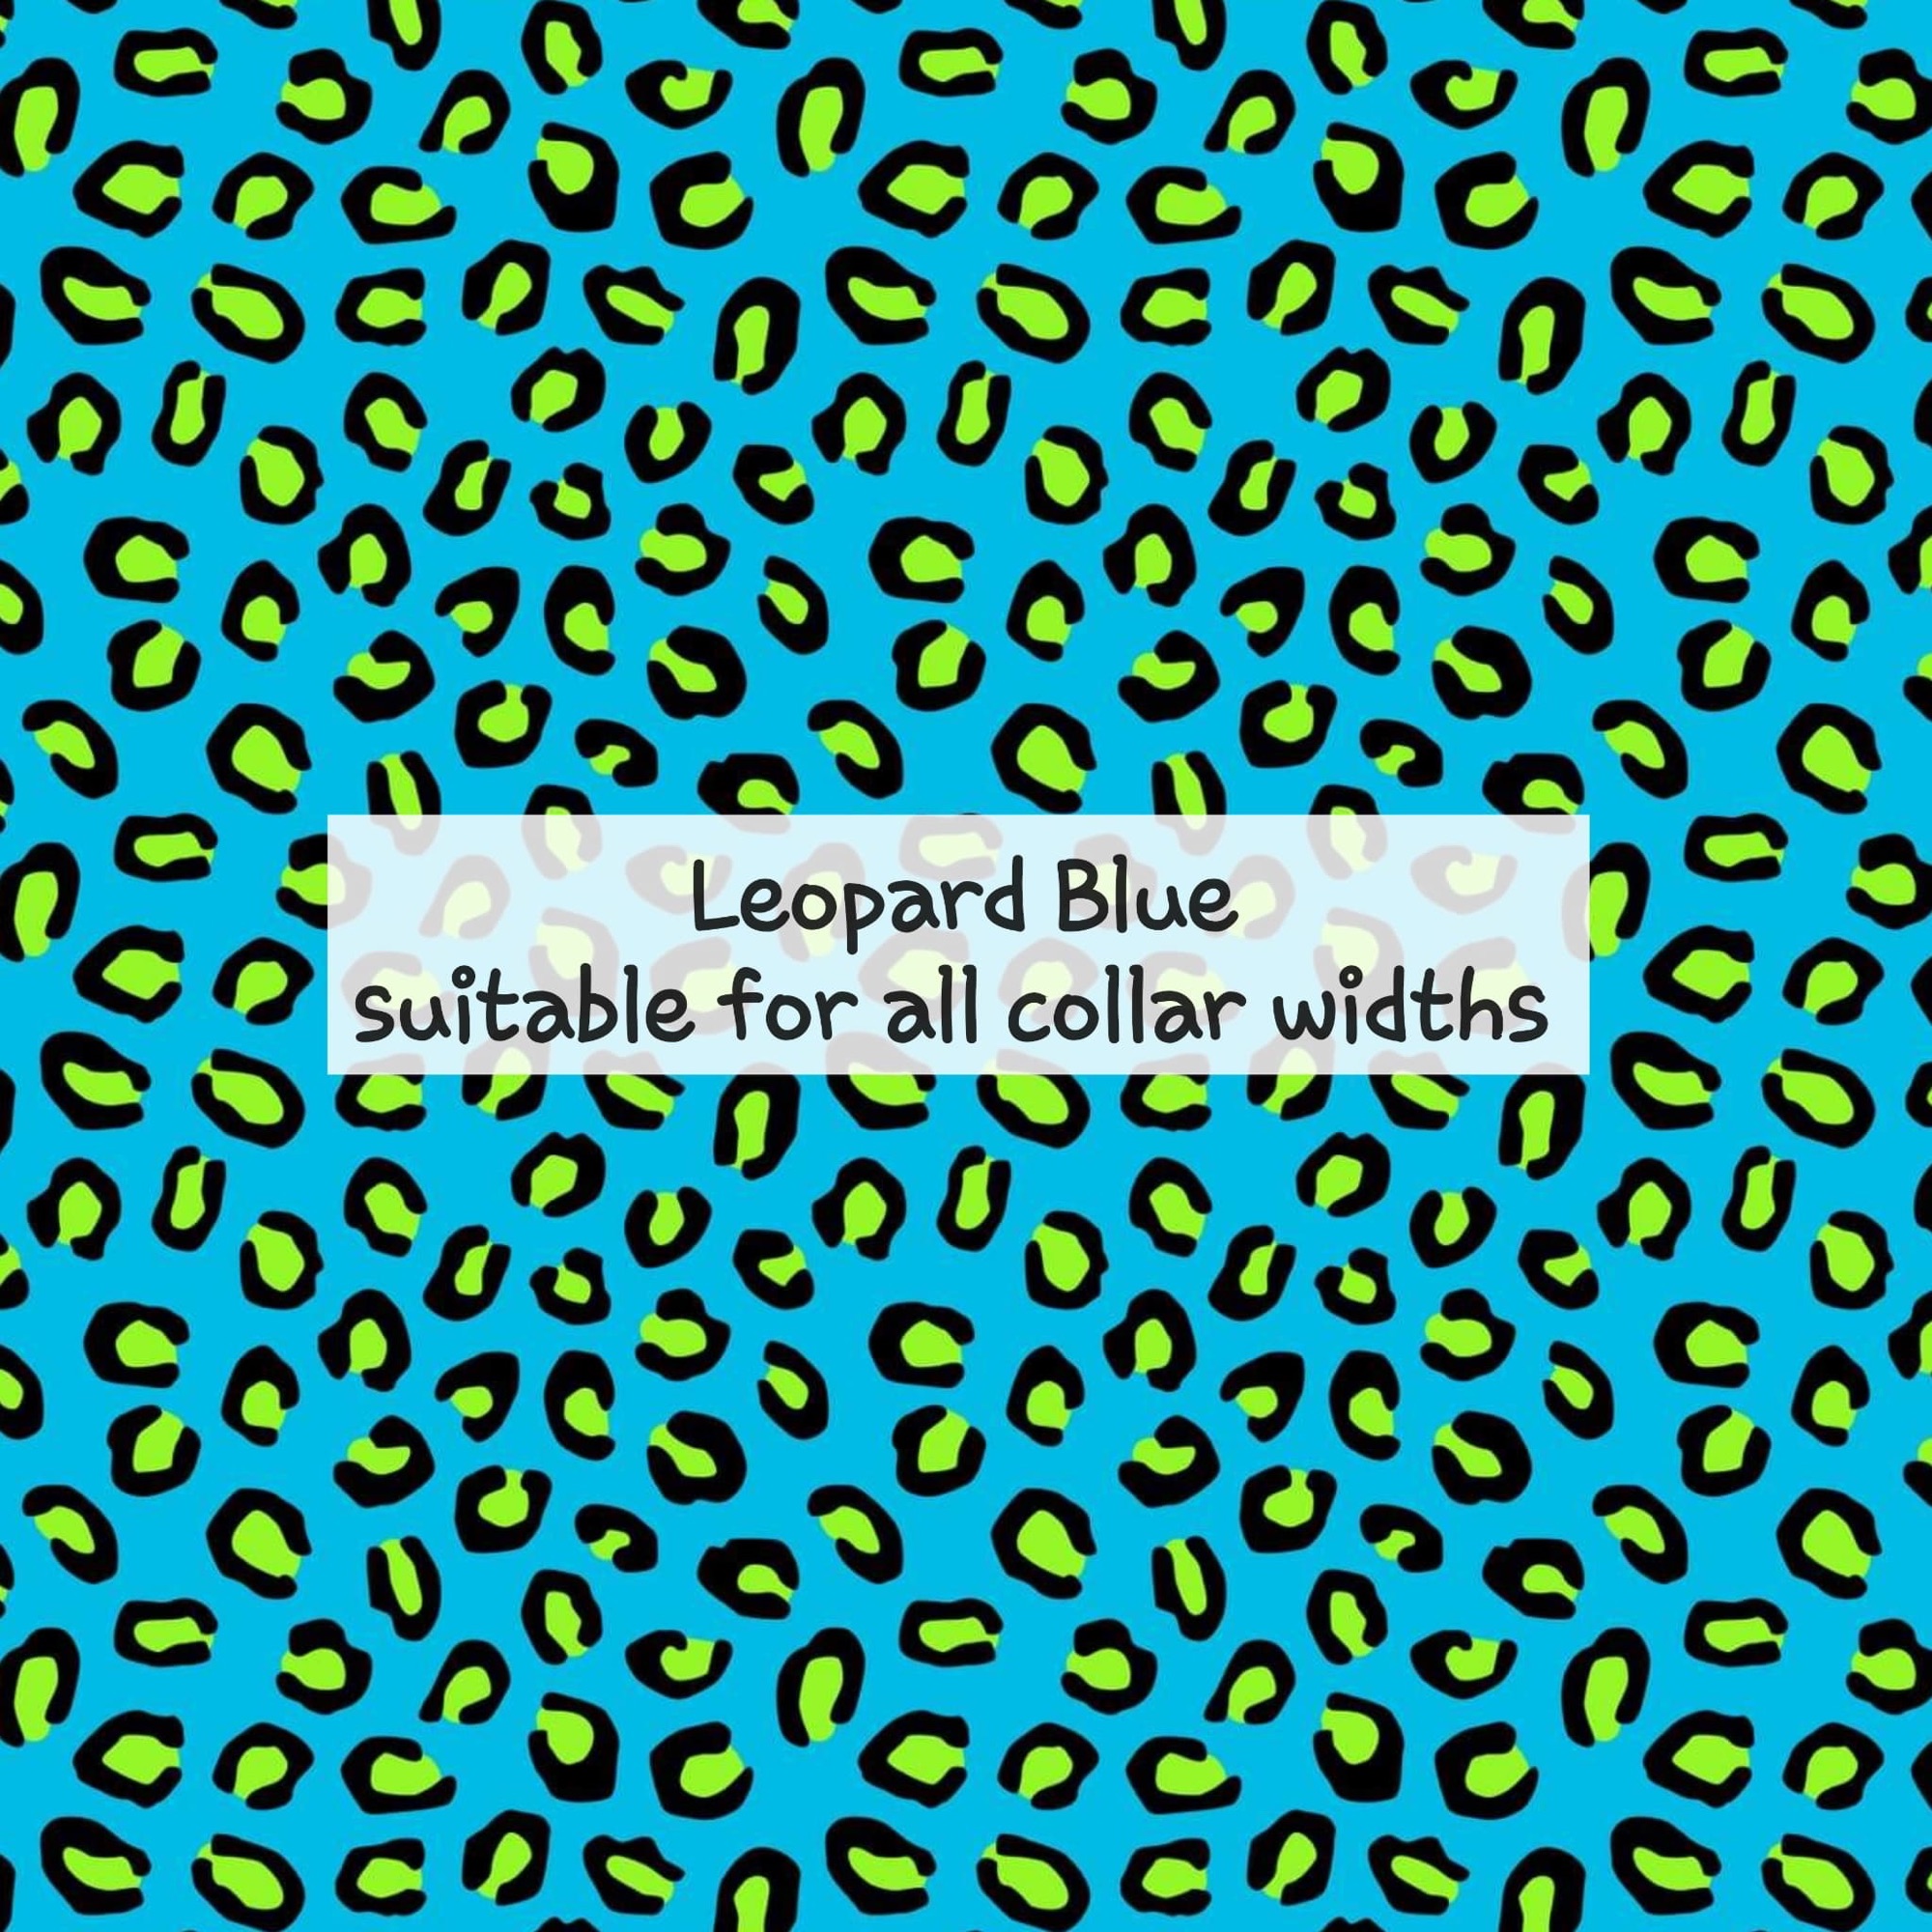 leopard blue